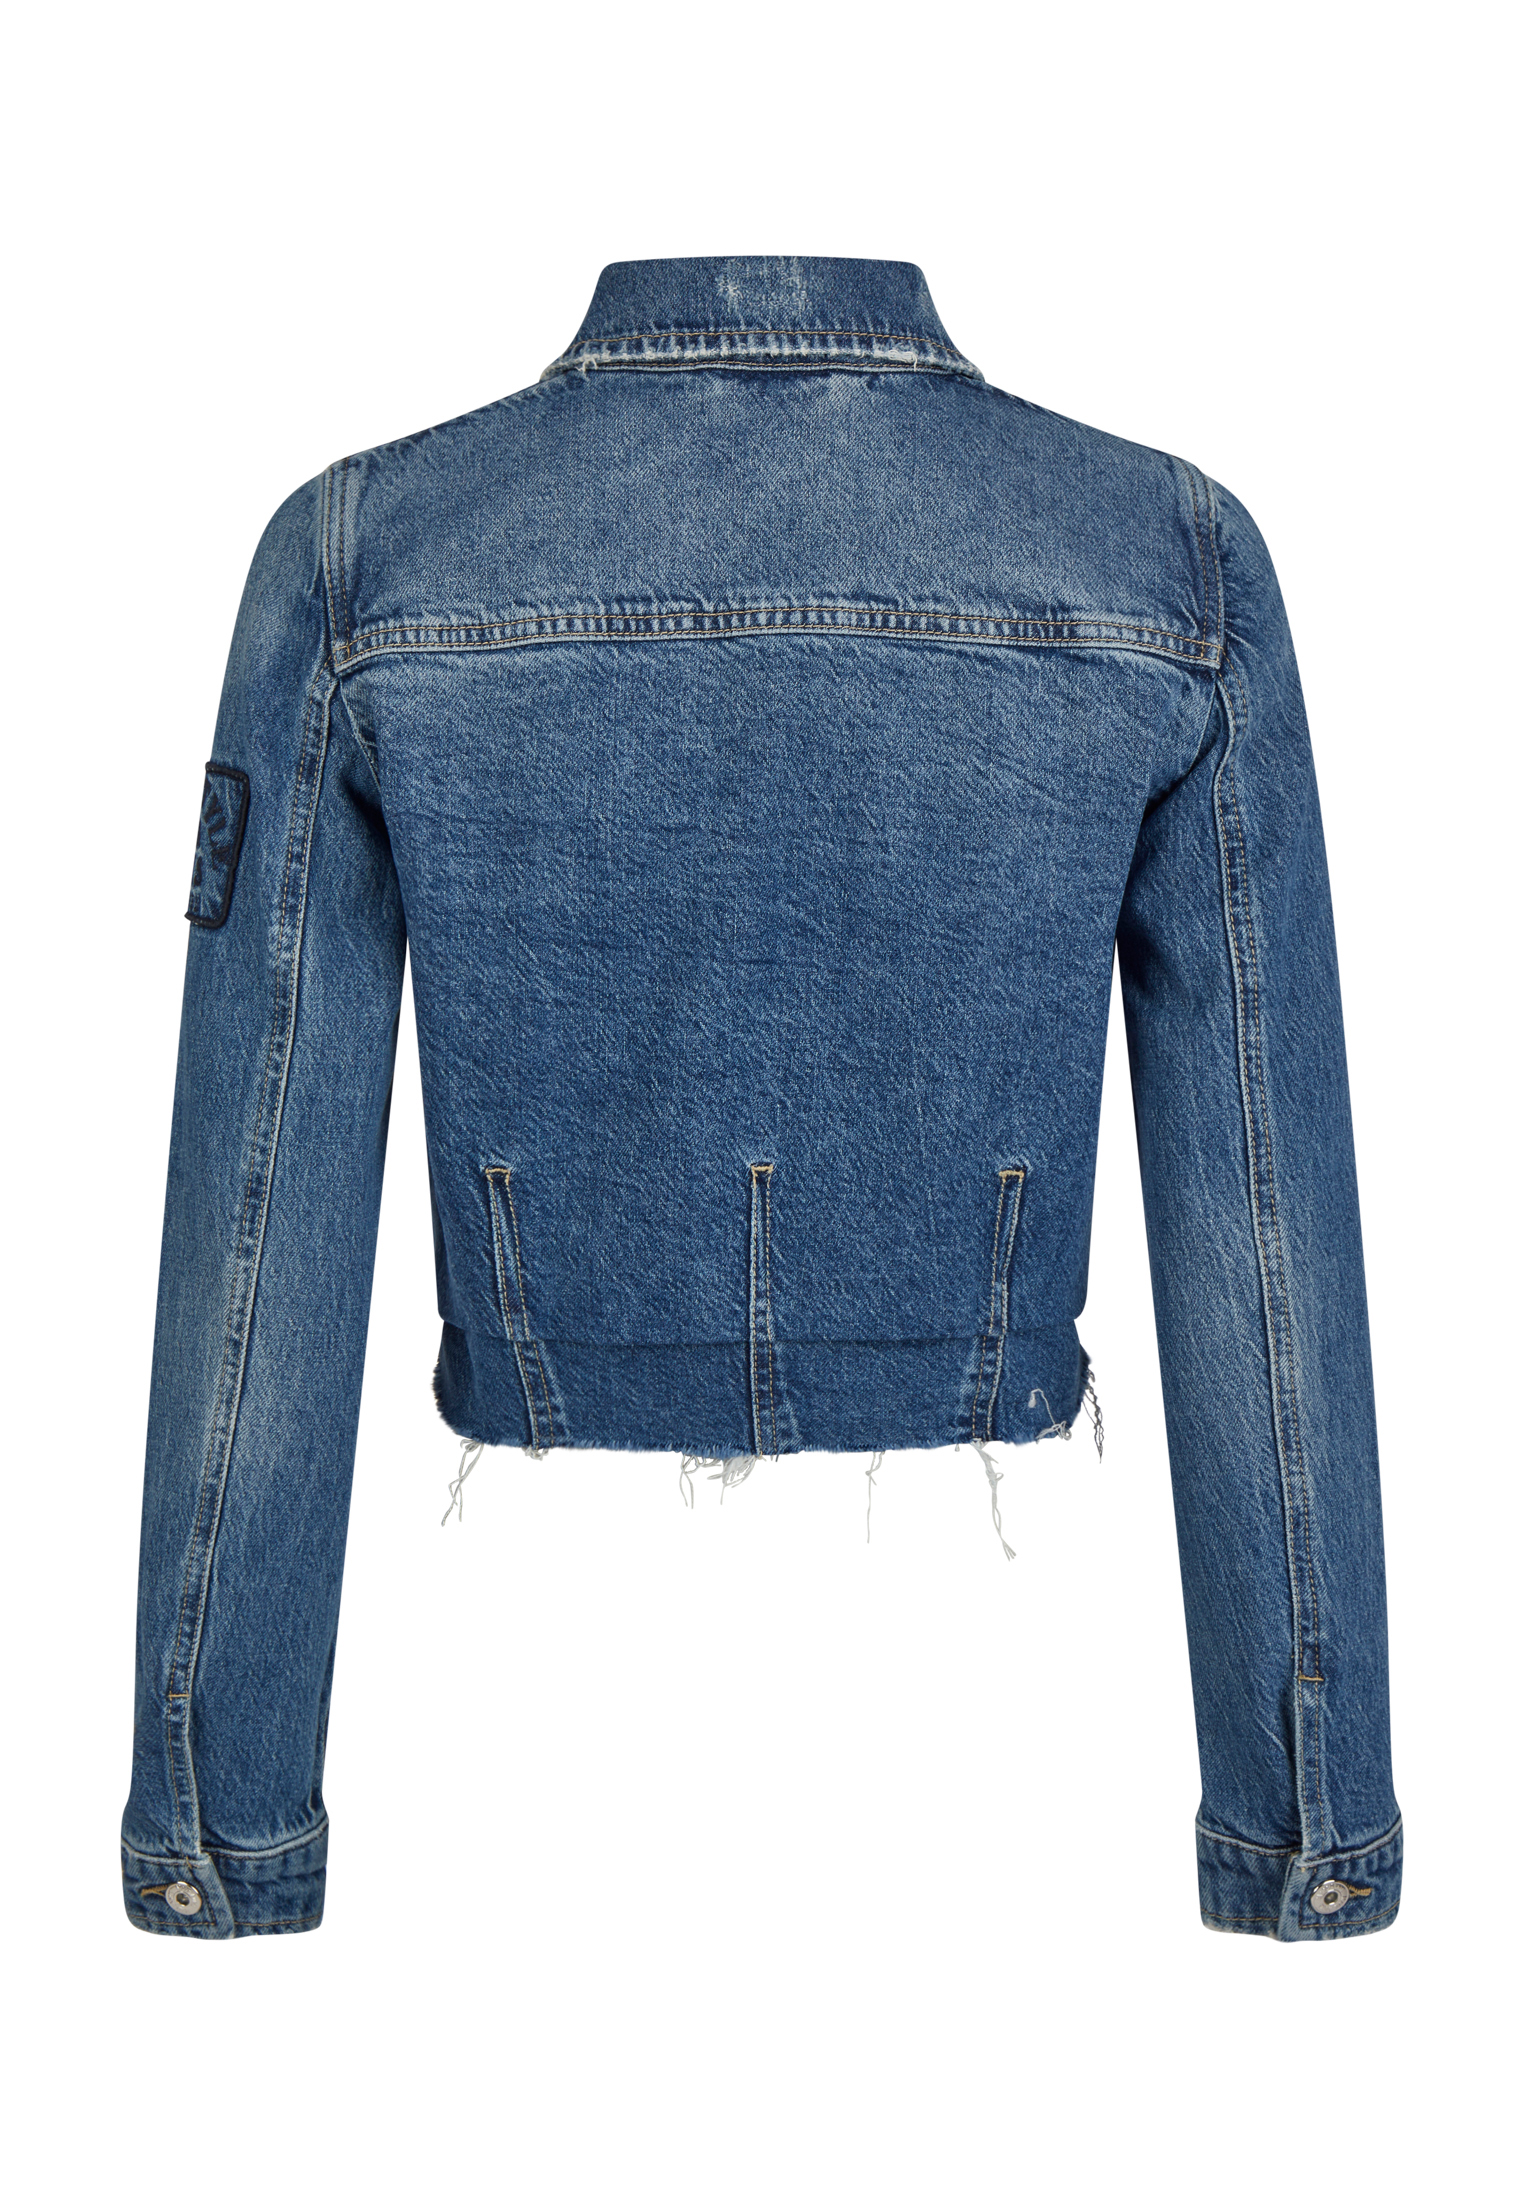 Jeansjacke aus Comfort Blue Denim